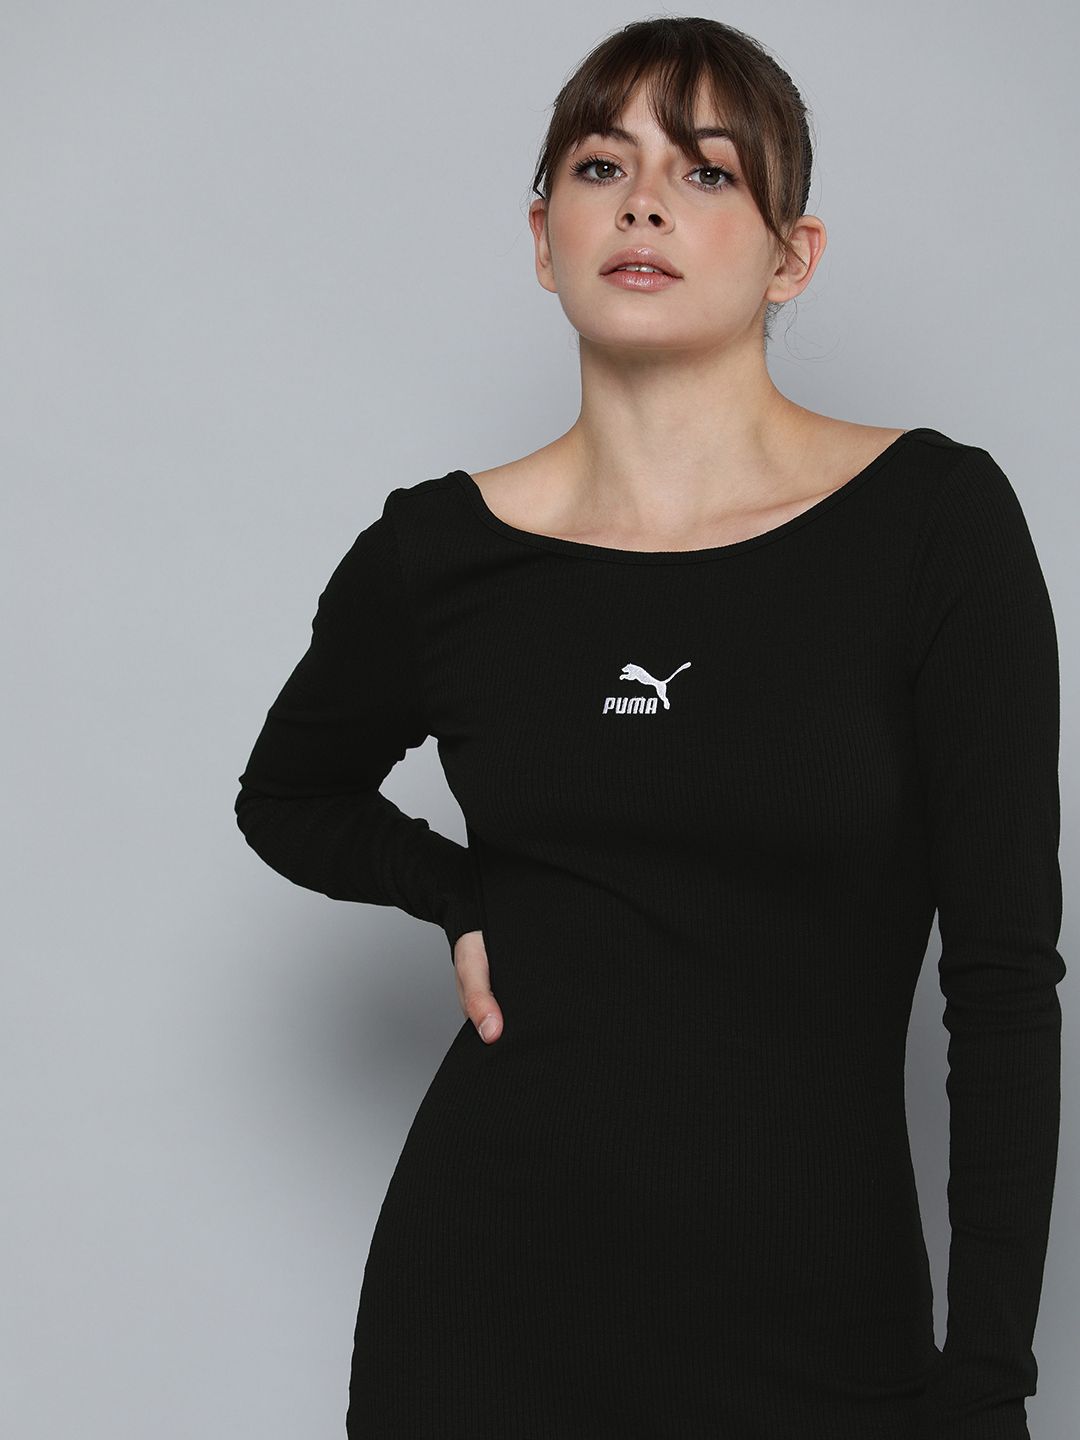 Puma Women Black Self Designed Bodycon Classic Ribbed Dress Price in India